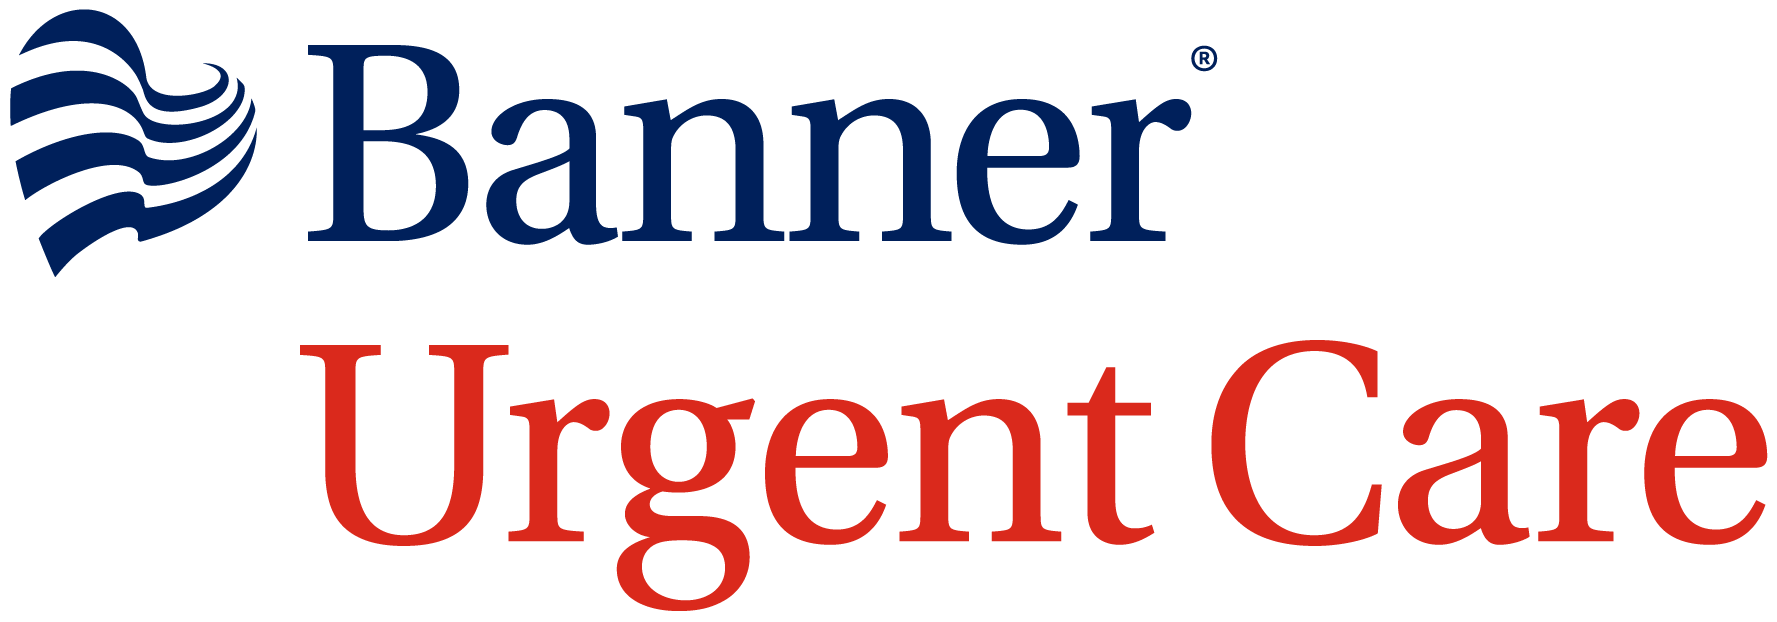 Banner Urgent Care Services